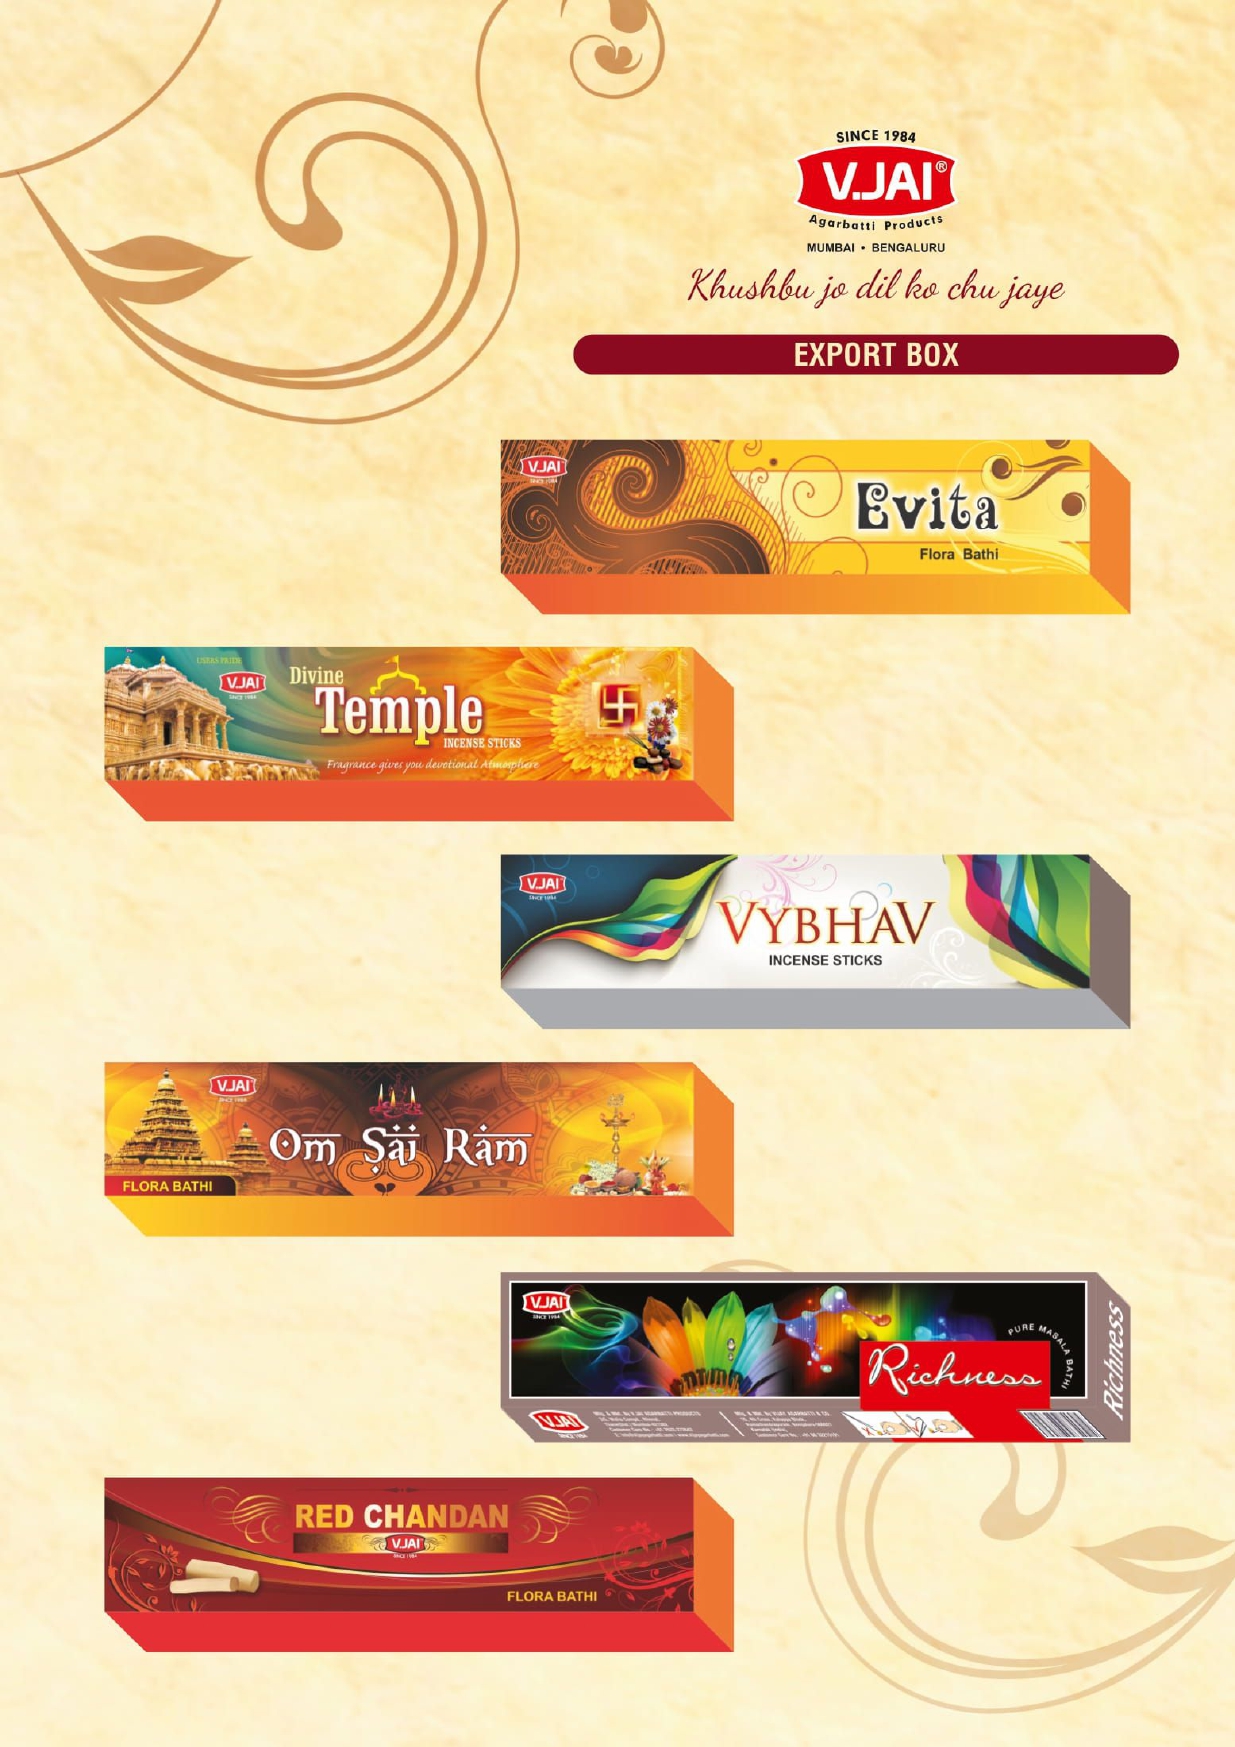 Evita, Temple, Vybhav, Om Sai Ram, Richness, Red Chandan, Export Boxes